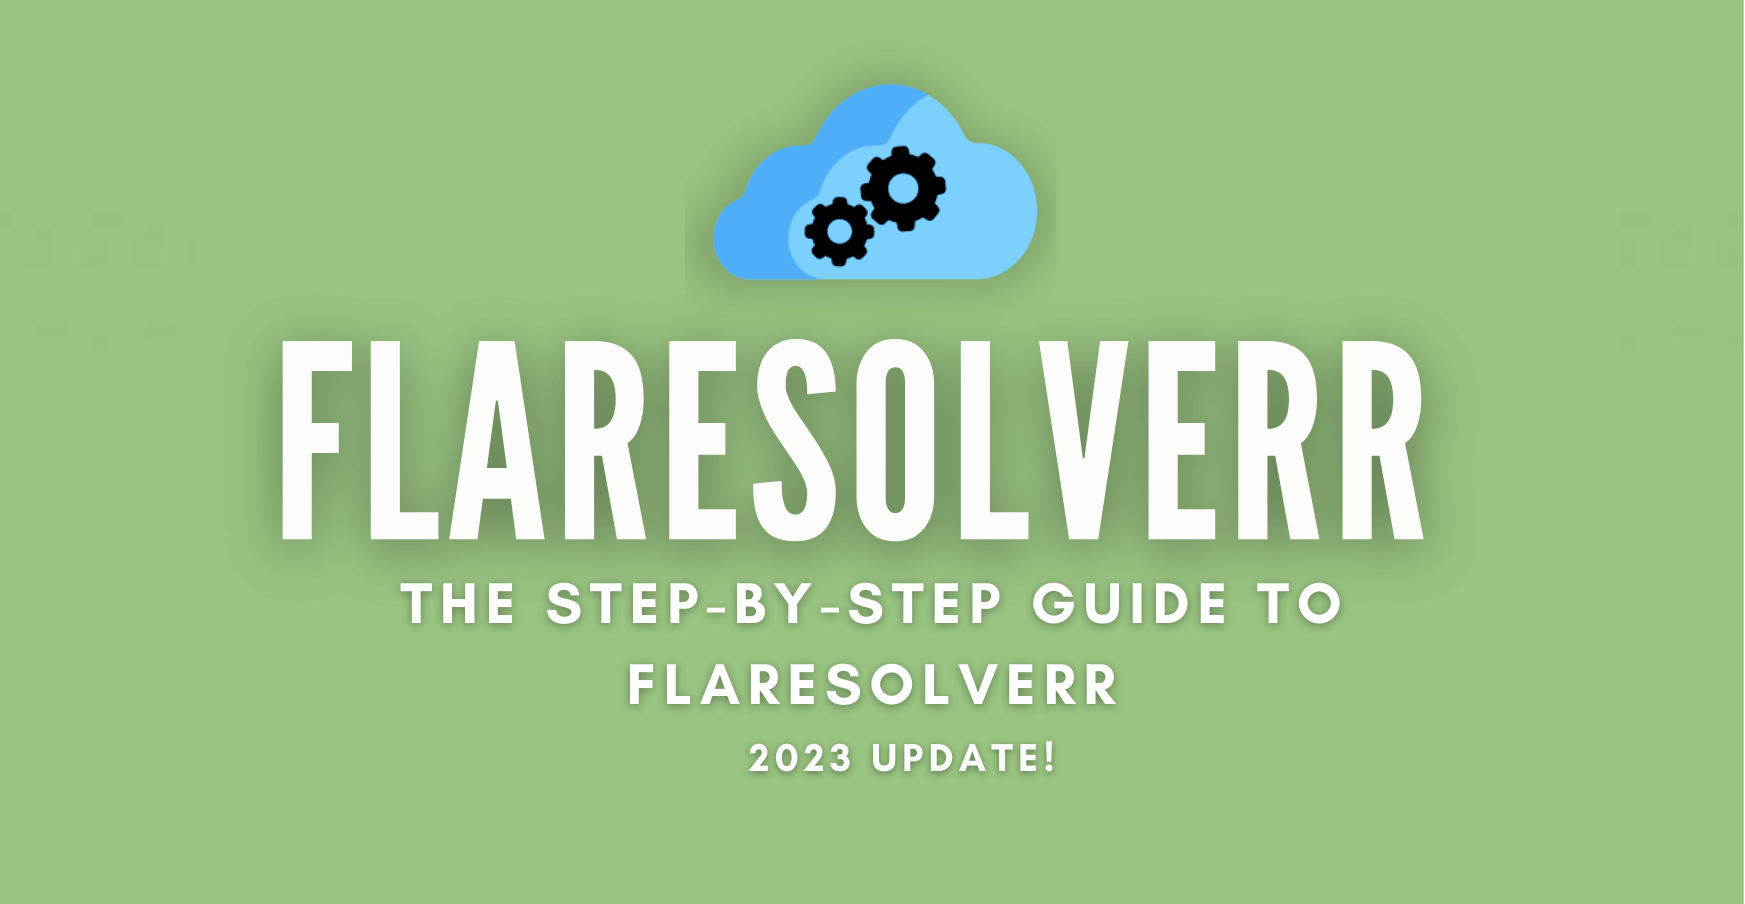 FlareSolverr guide 2023